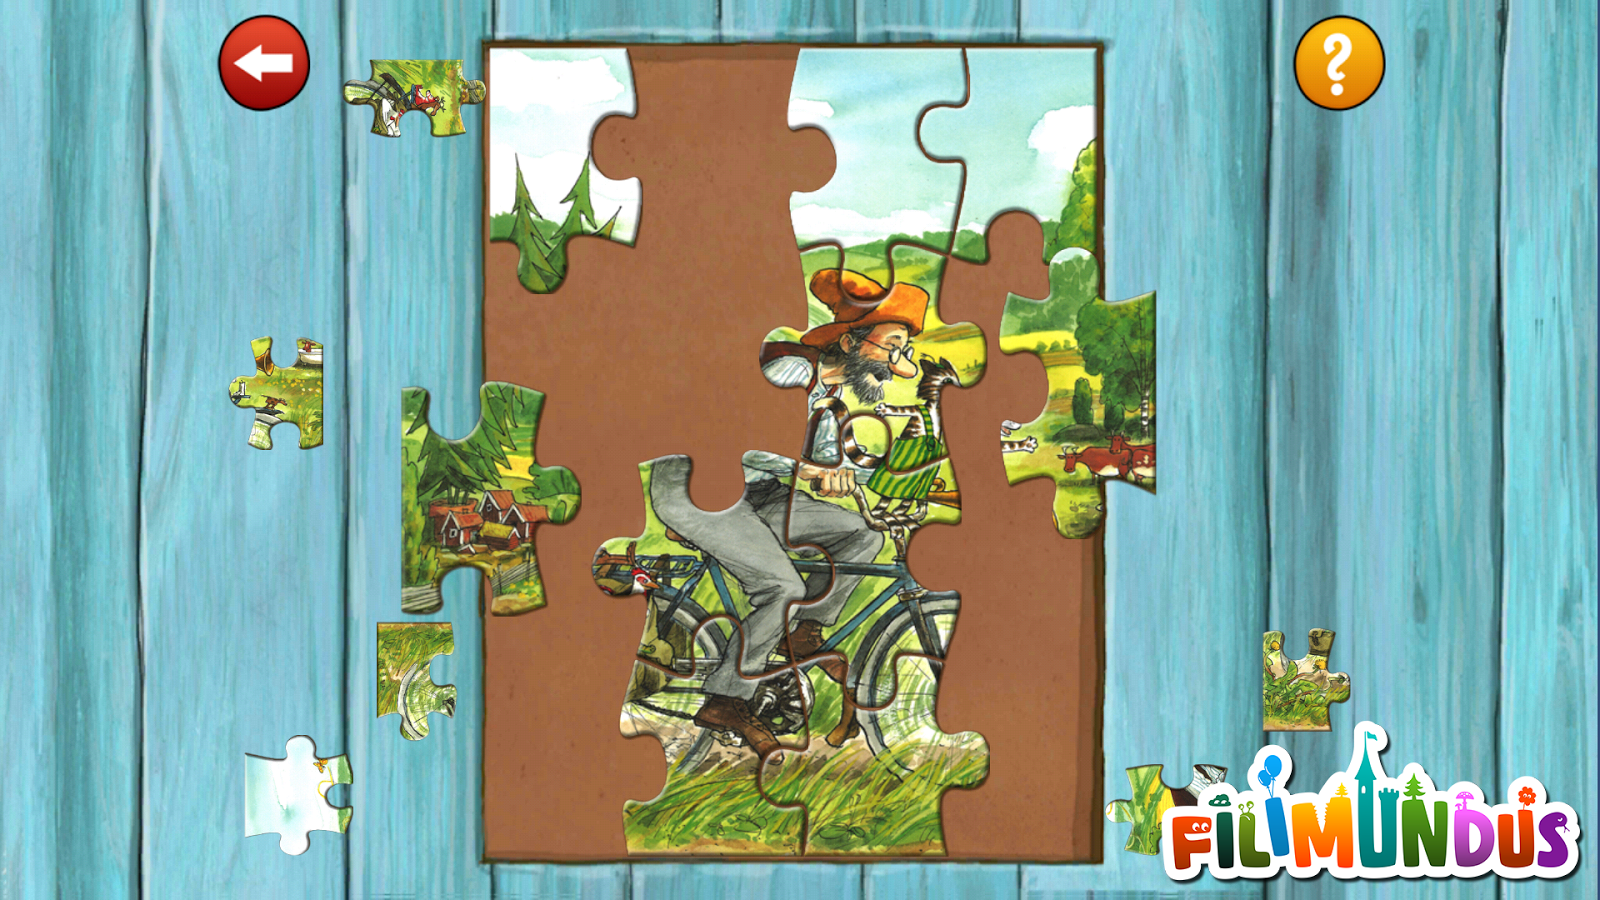 Pettson's Jigsaw Puzzle - screenshot